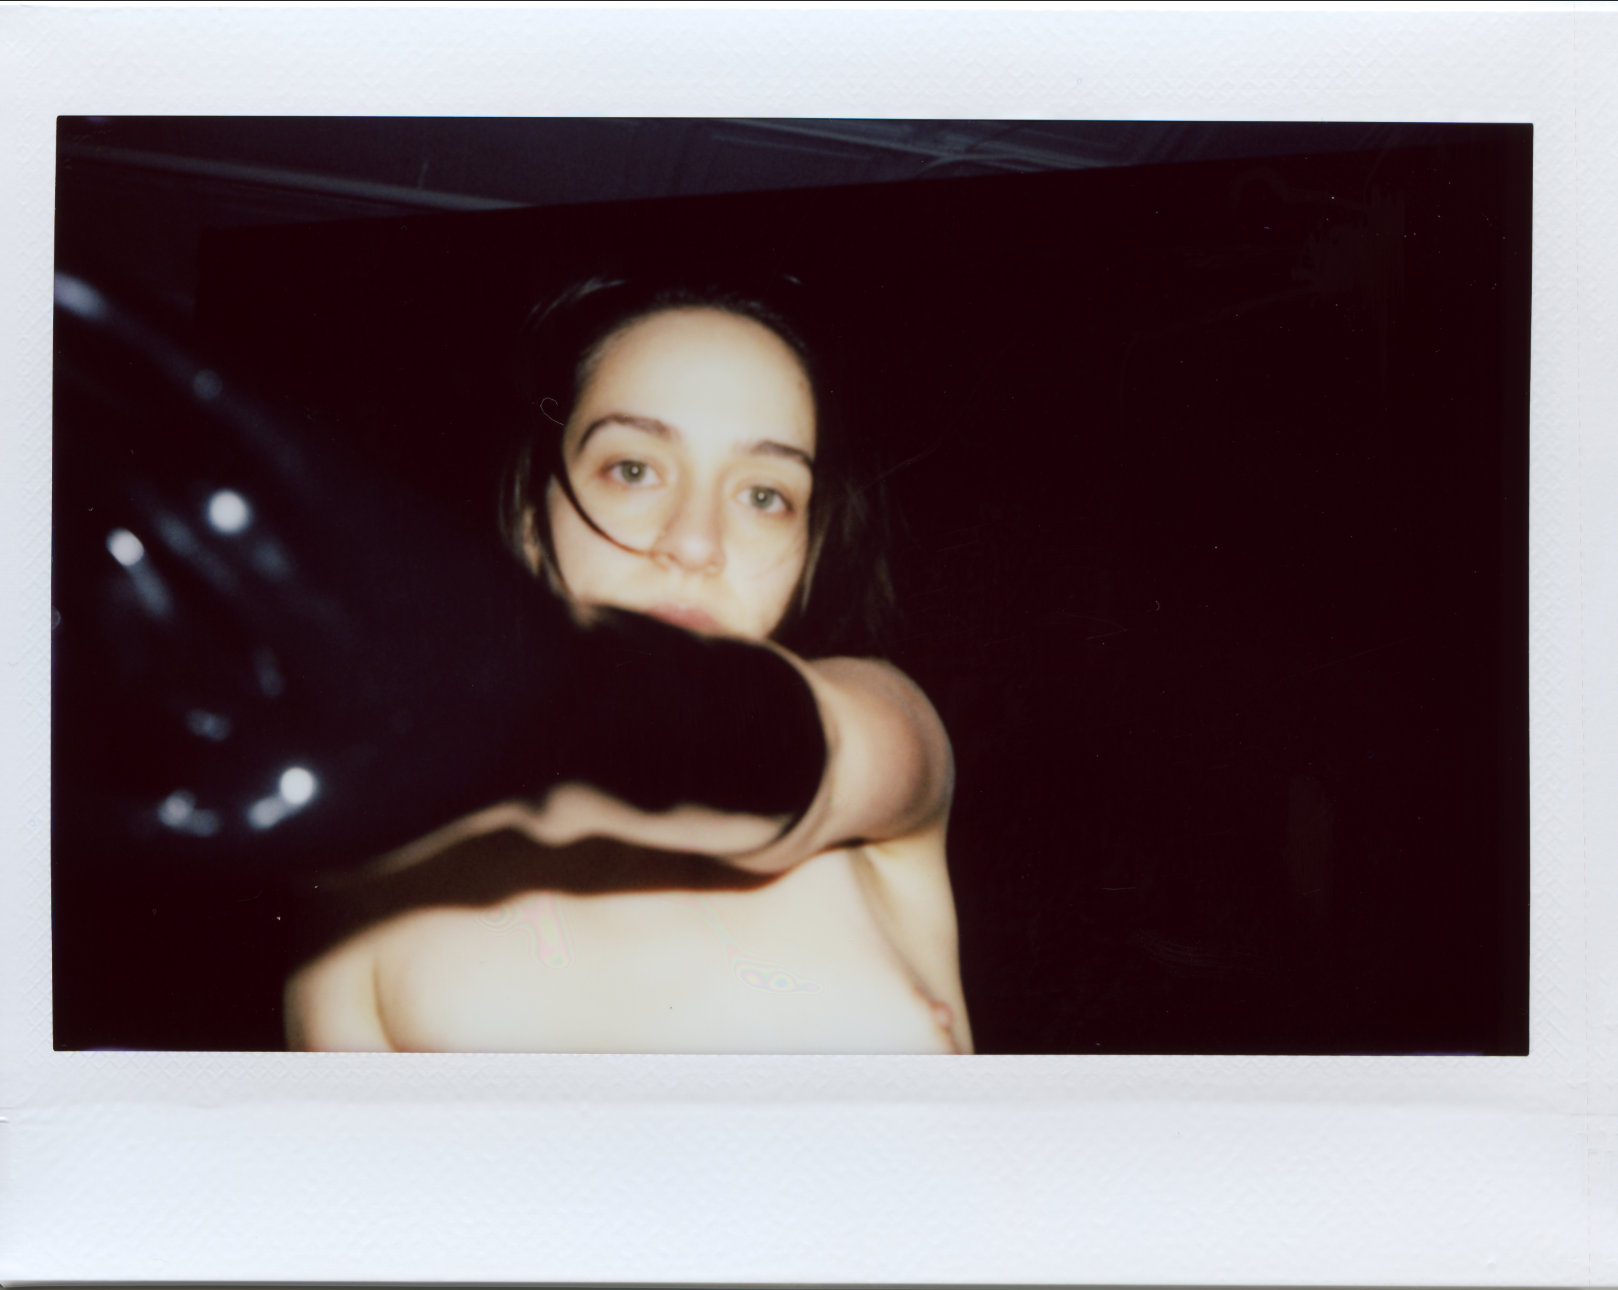 Image: Jasmine Mendoza's black-gloved hand reaches toward the camera in a Polaroid portrait.